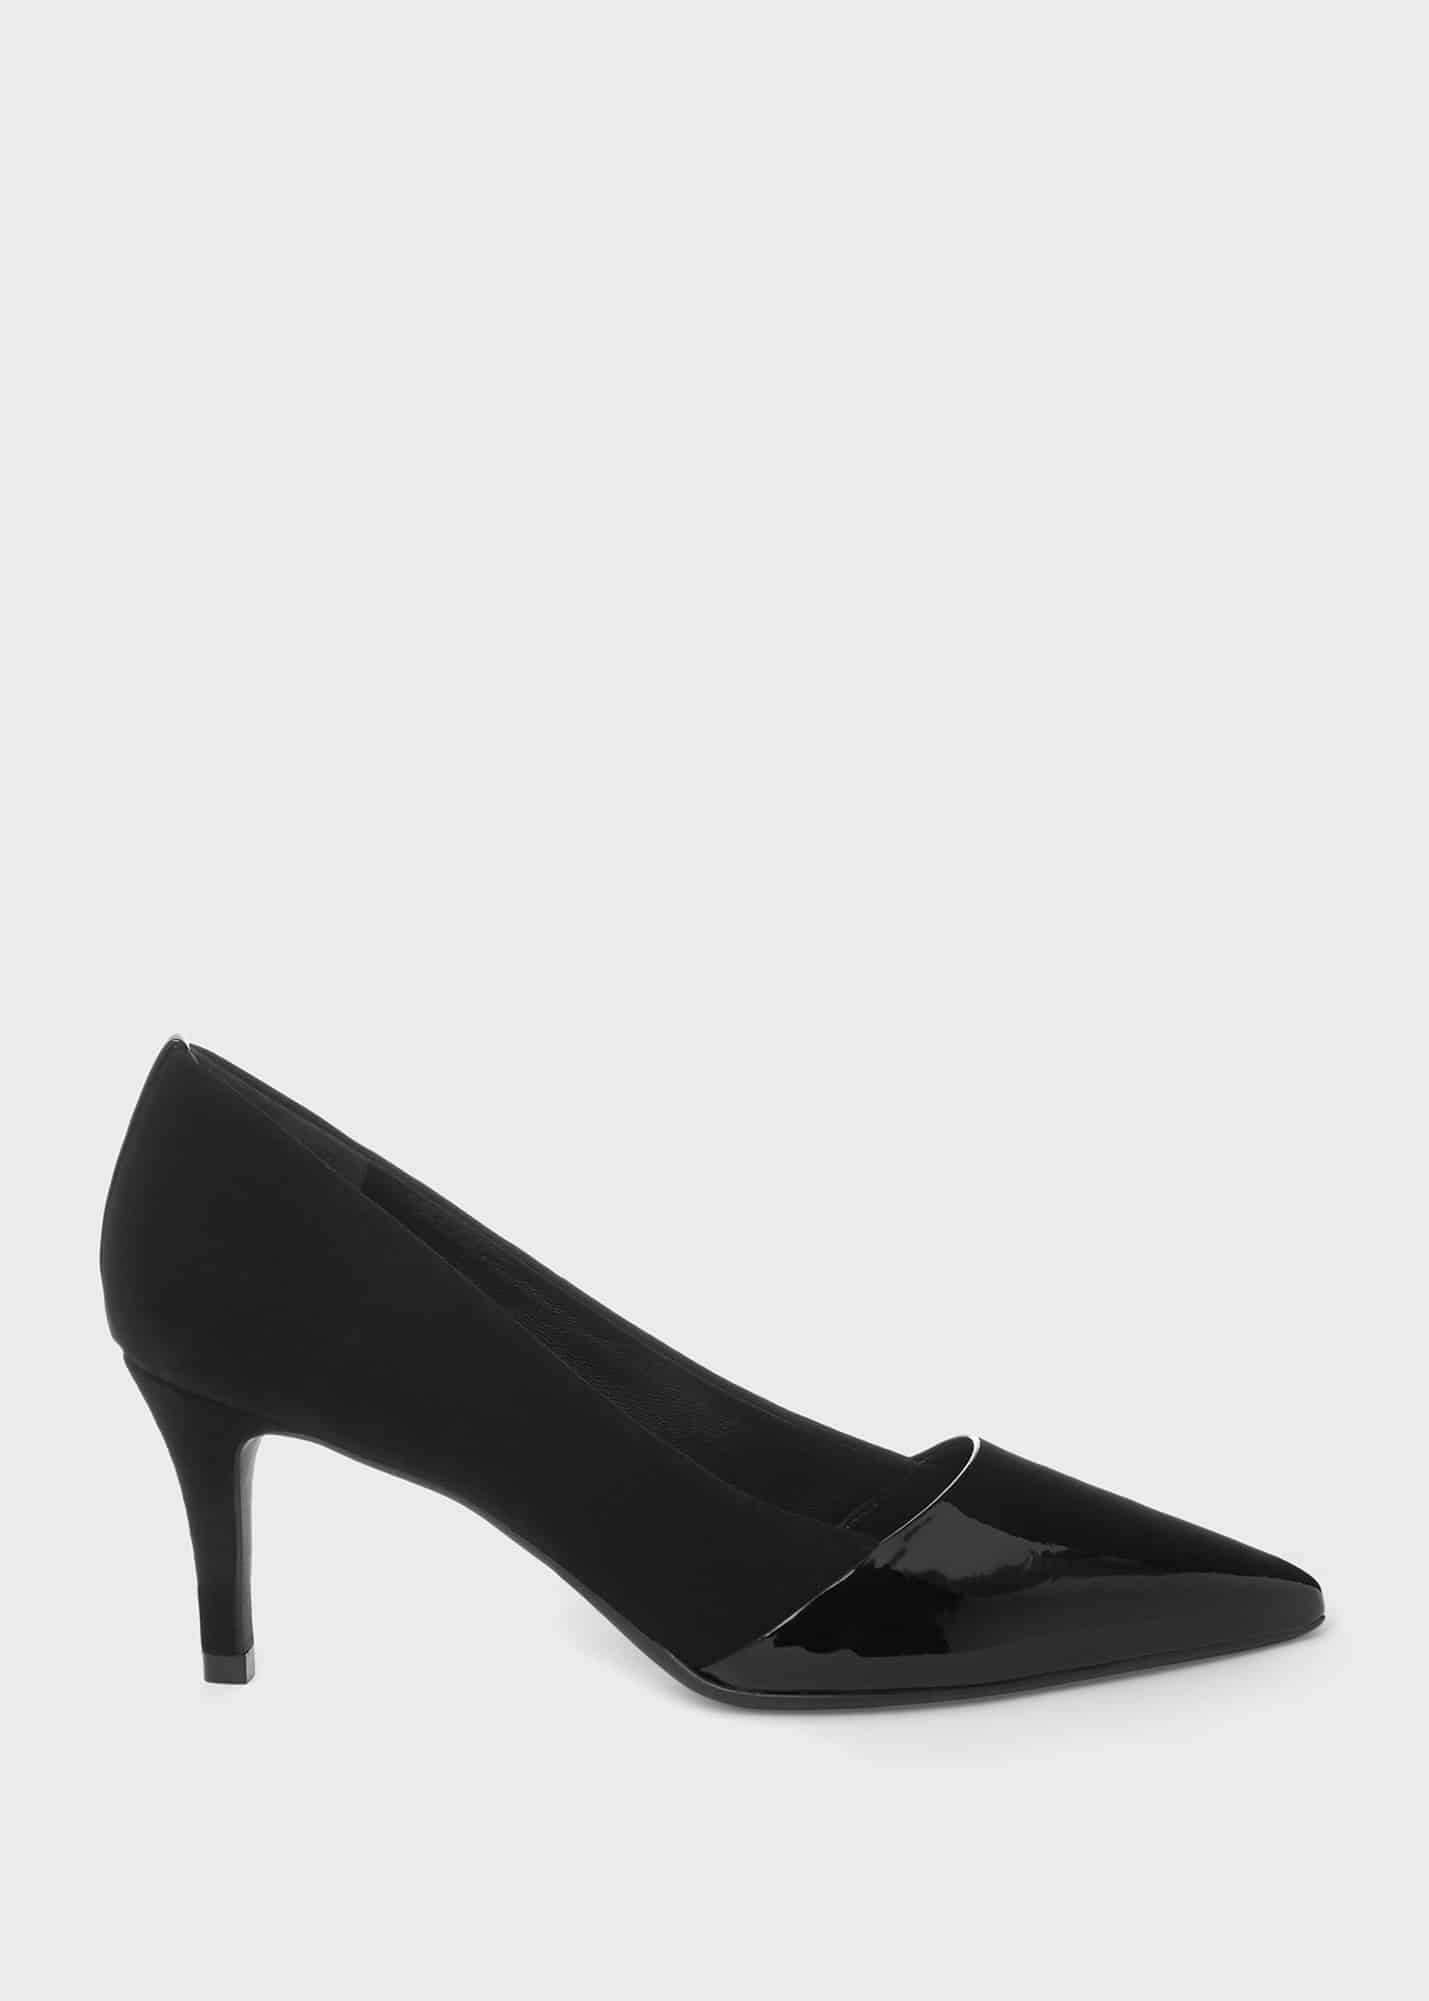 Hobbs Women's Rowan Suede Court Shoes - Black